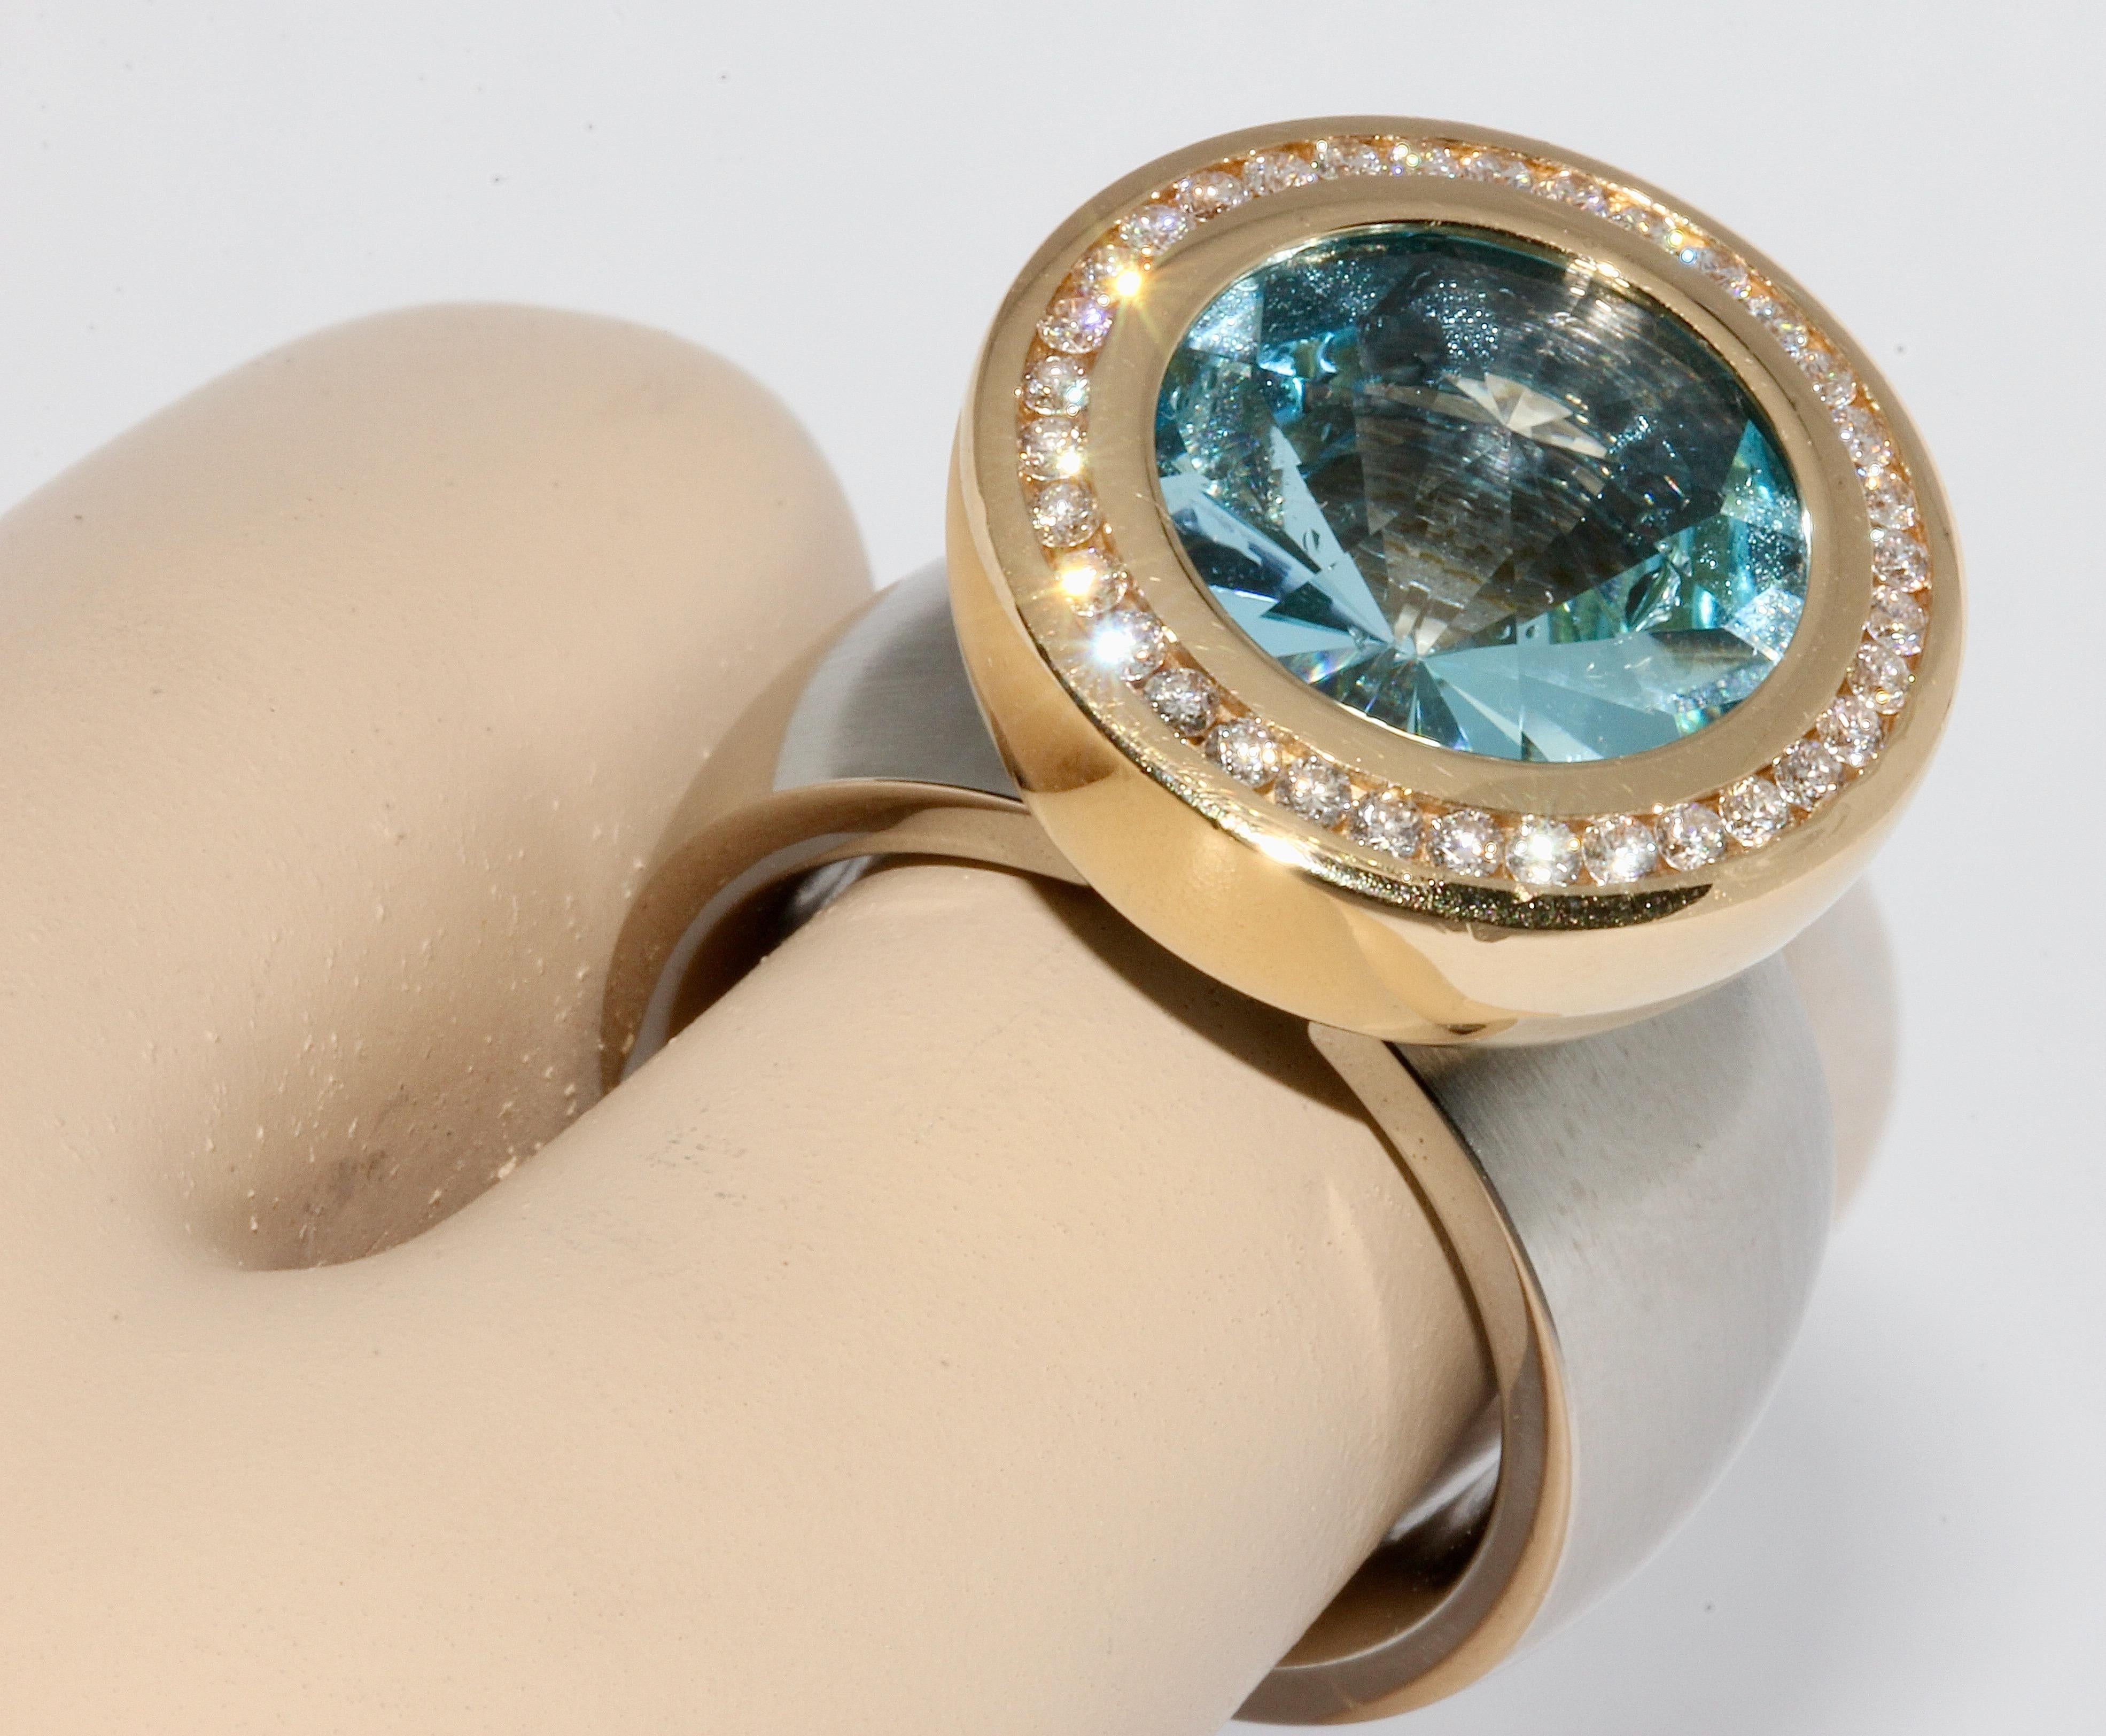 Palladium with 18k Gold, Designer Ring by Rohrbacher, Aquamarine and Diamonds For Sale 2